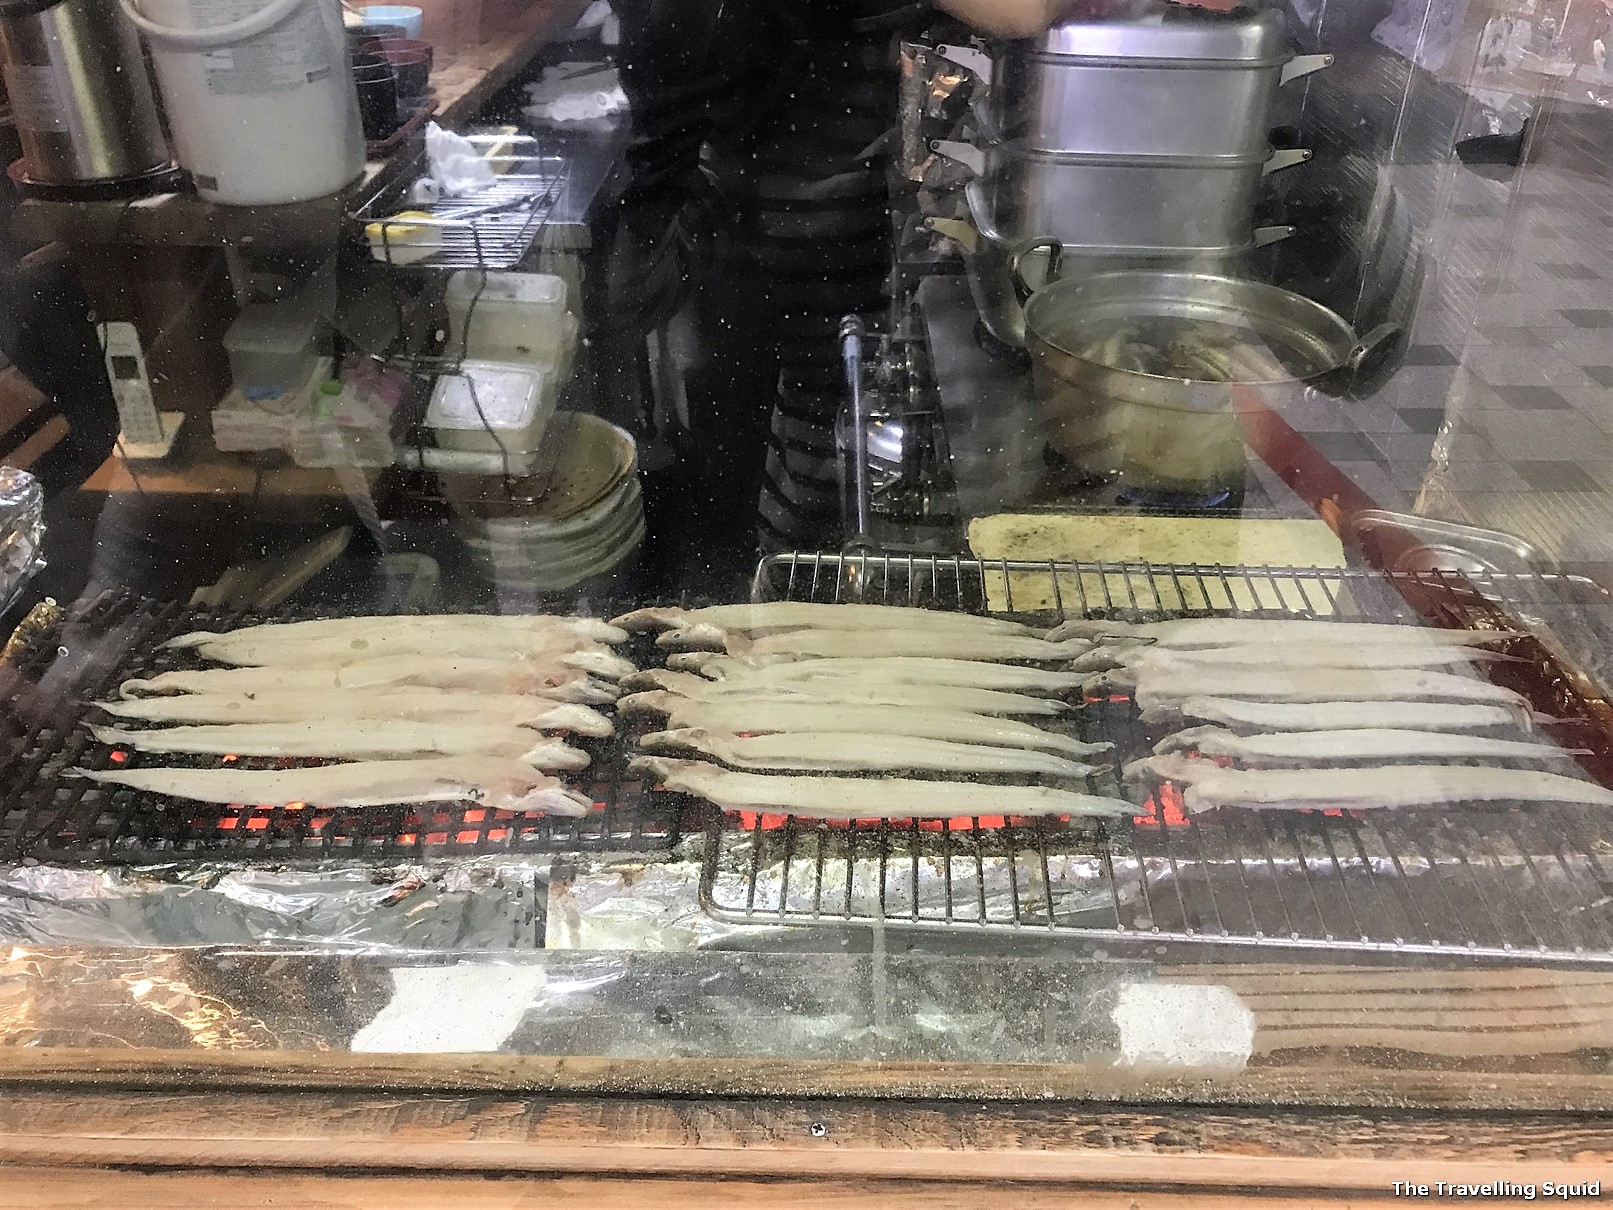 Yamayoshi Anago in Himeji for eel rice